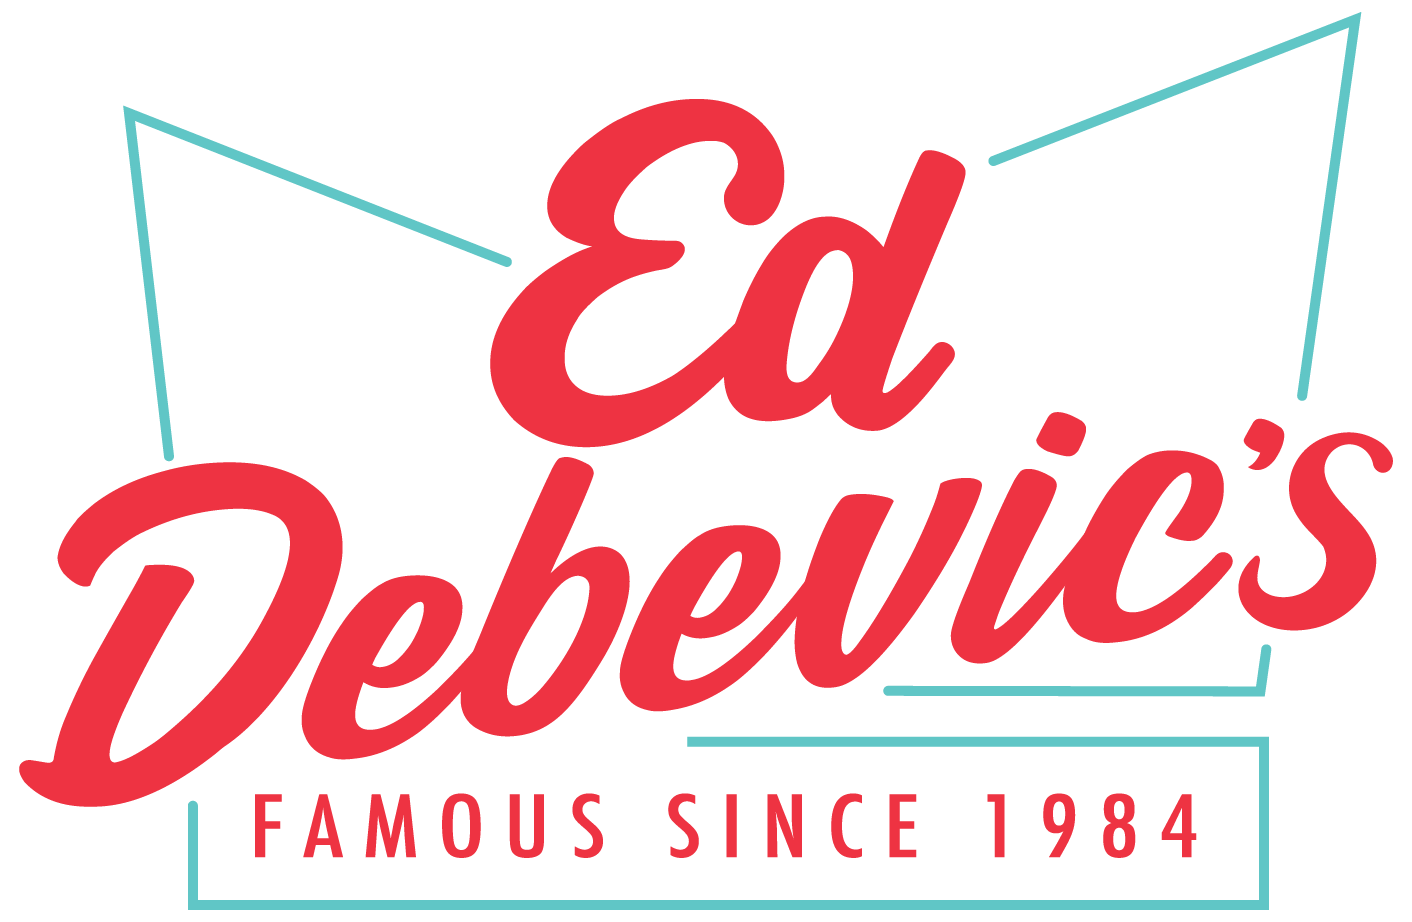 Ed Debevic S